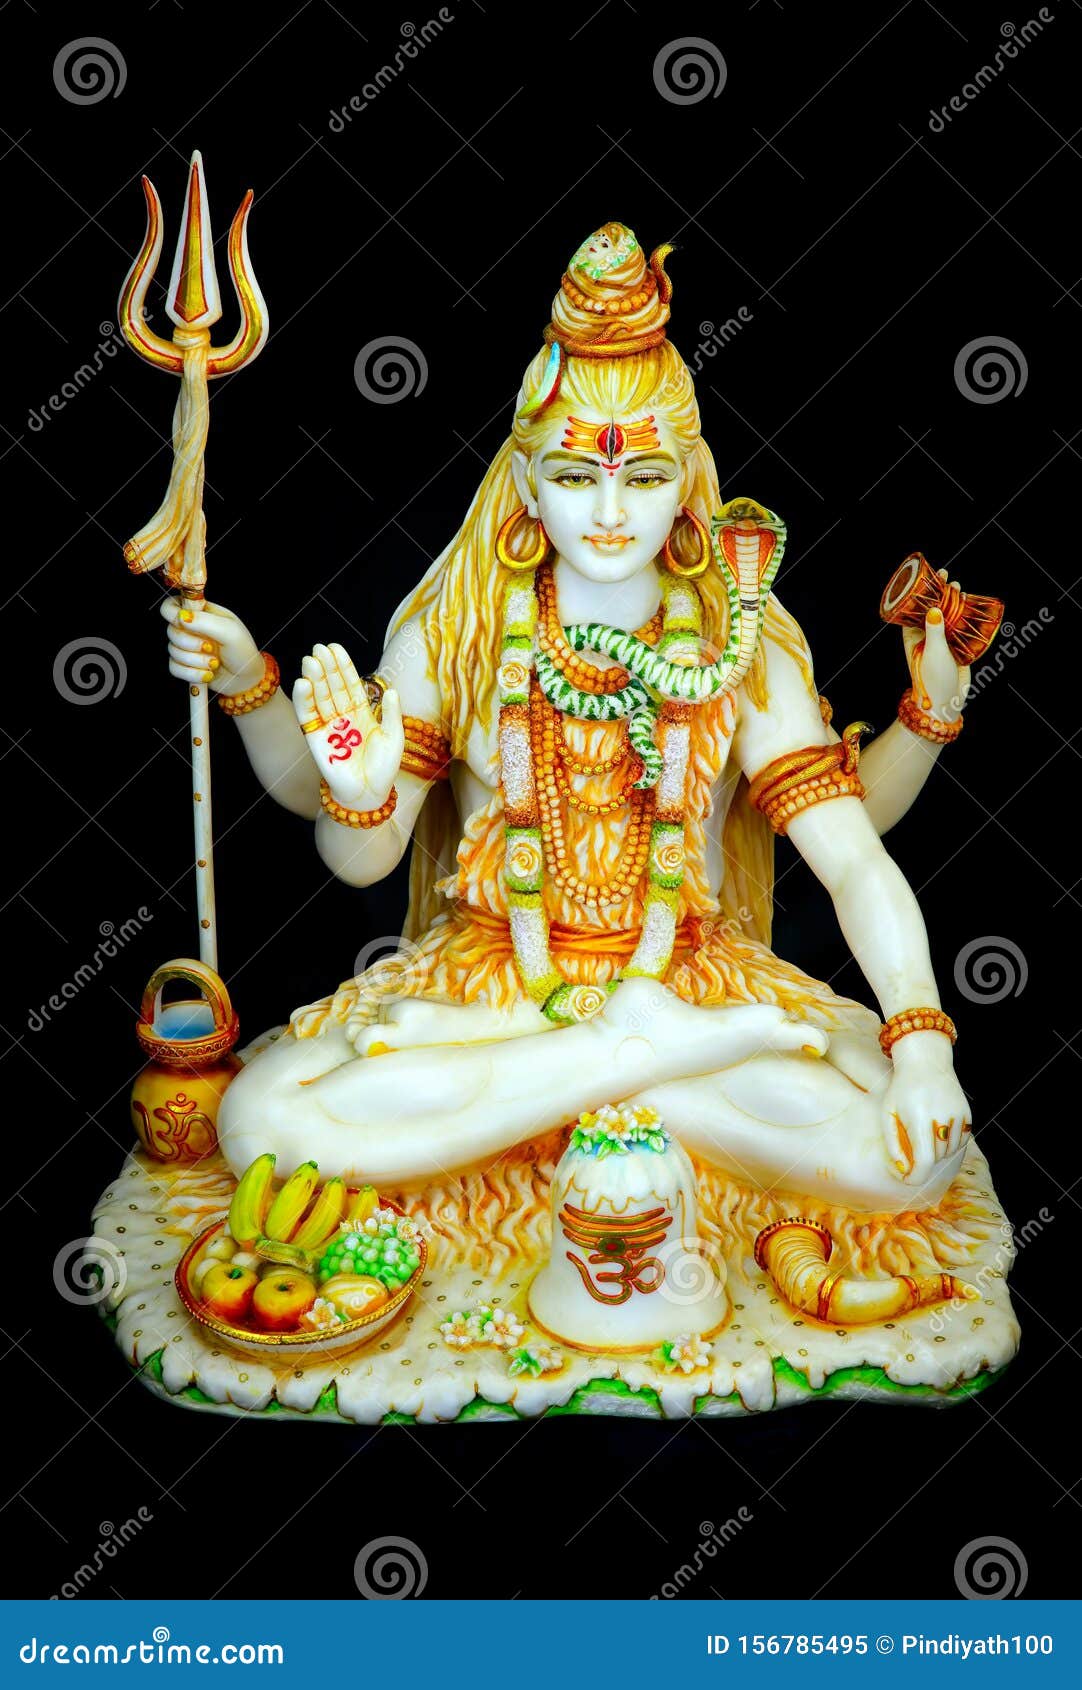 Marble Statue of Hindu God, Lord Shiva Stock Image - Image of ...